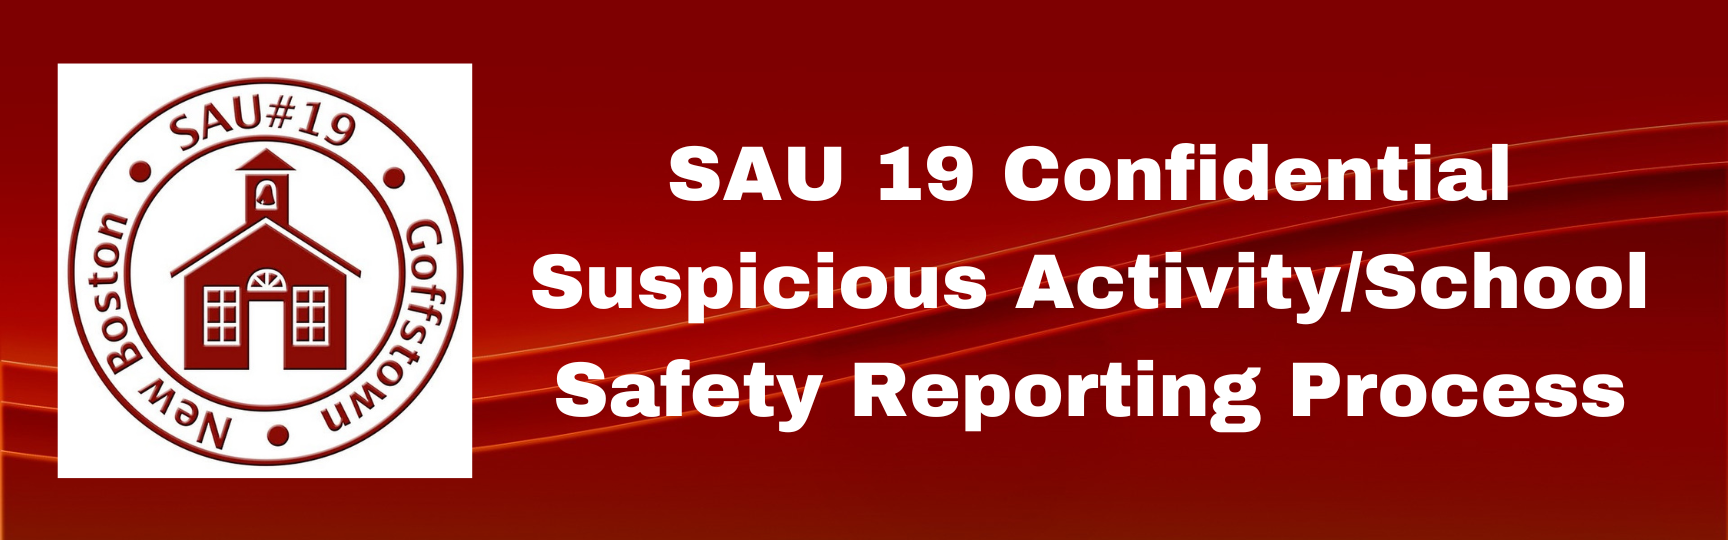 SAU 19 Confidential Suspicious Activity/School Reporting Process